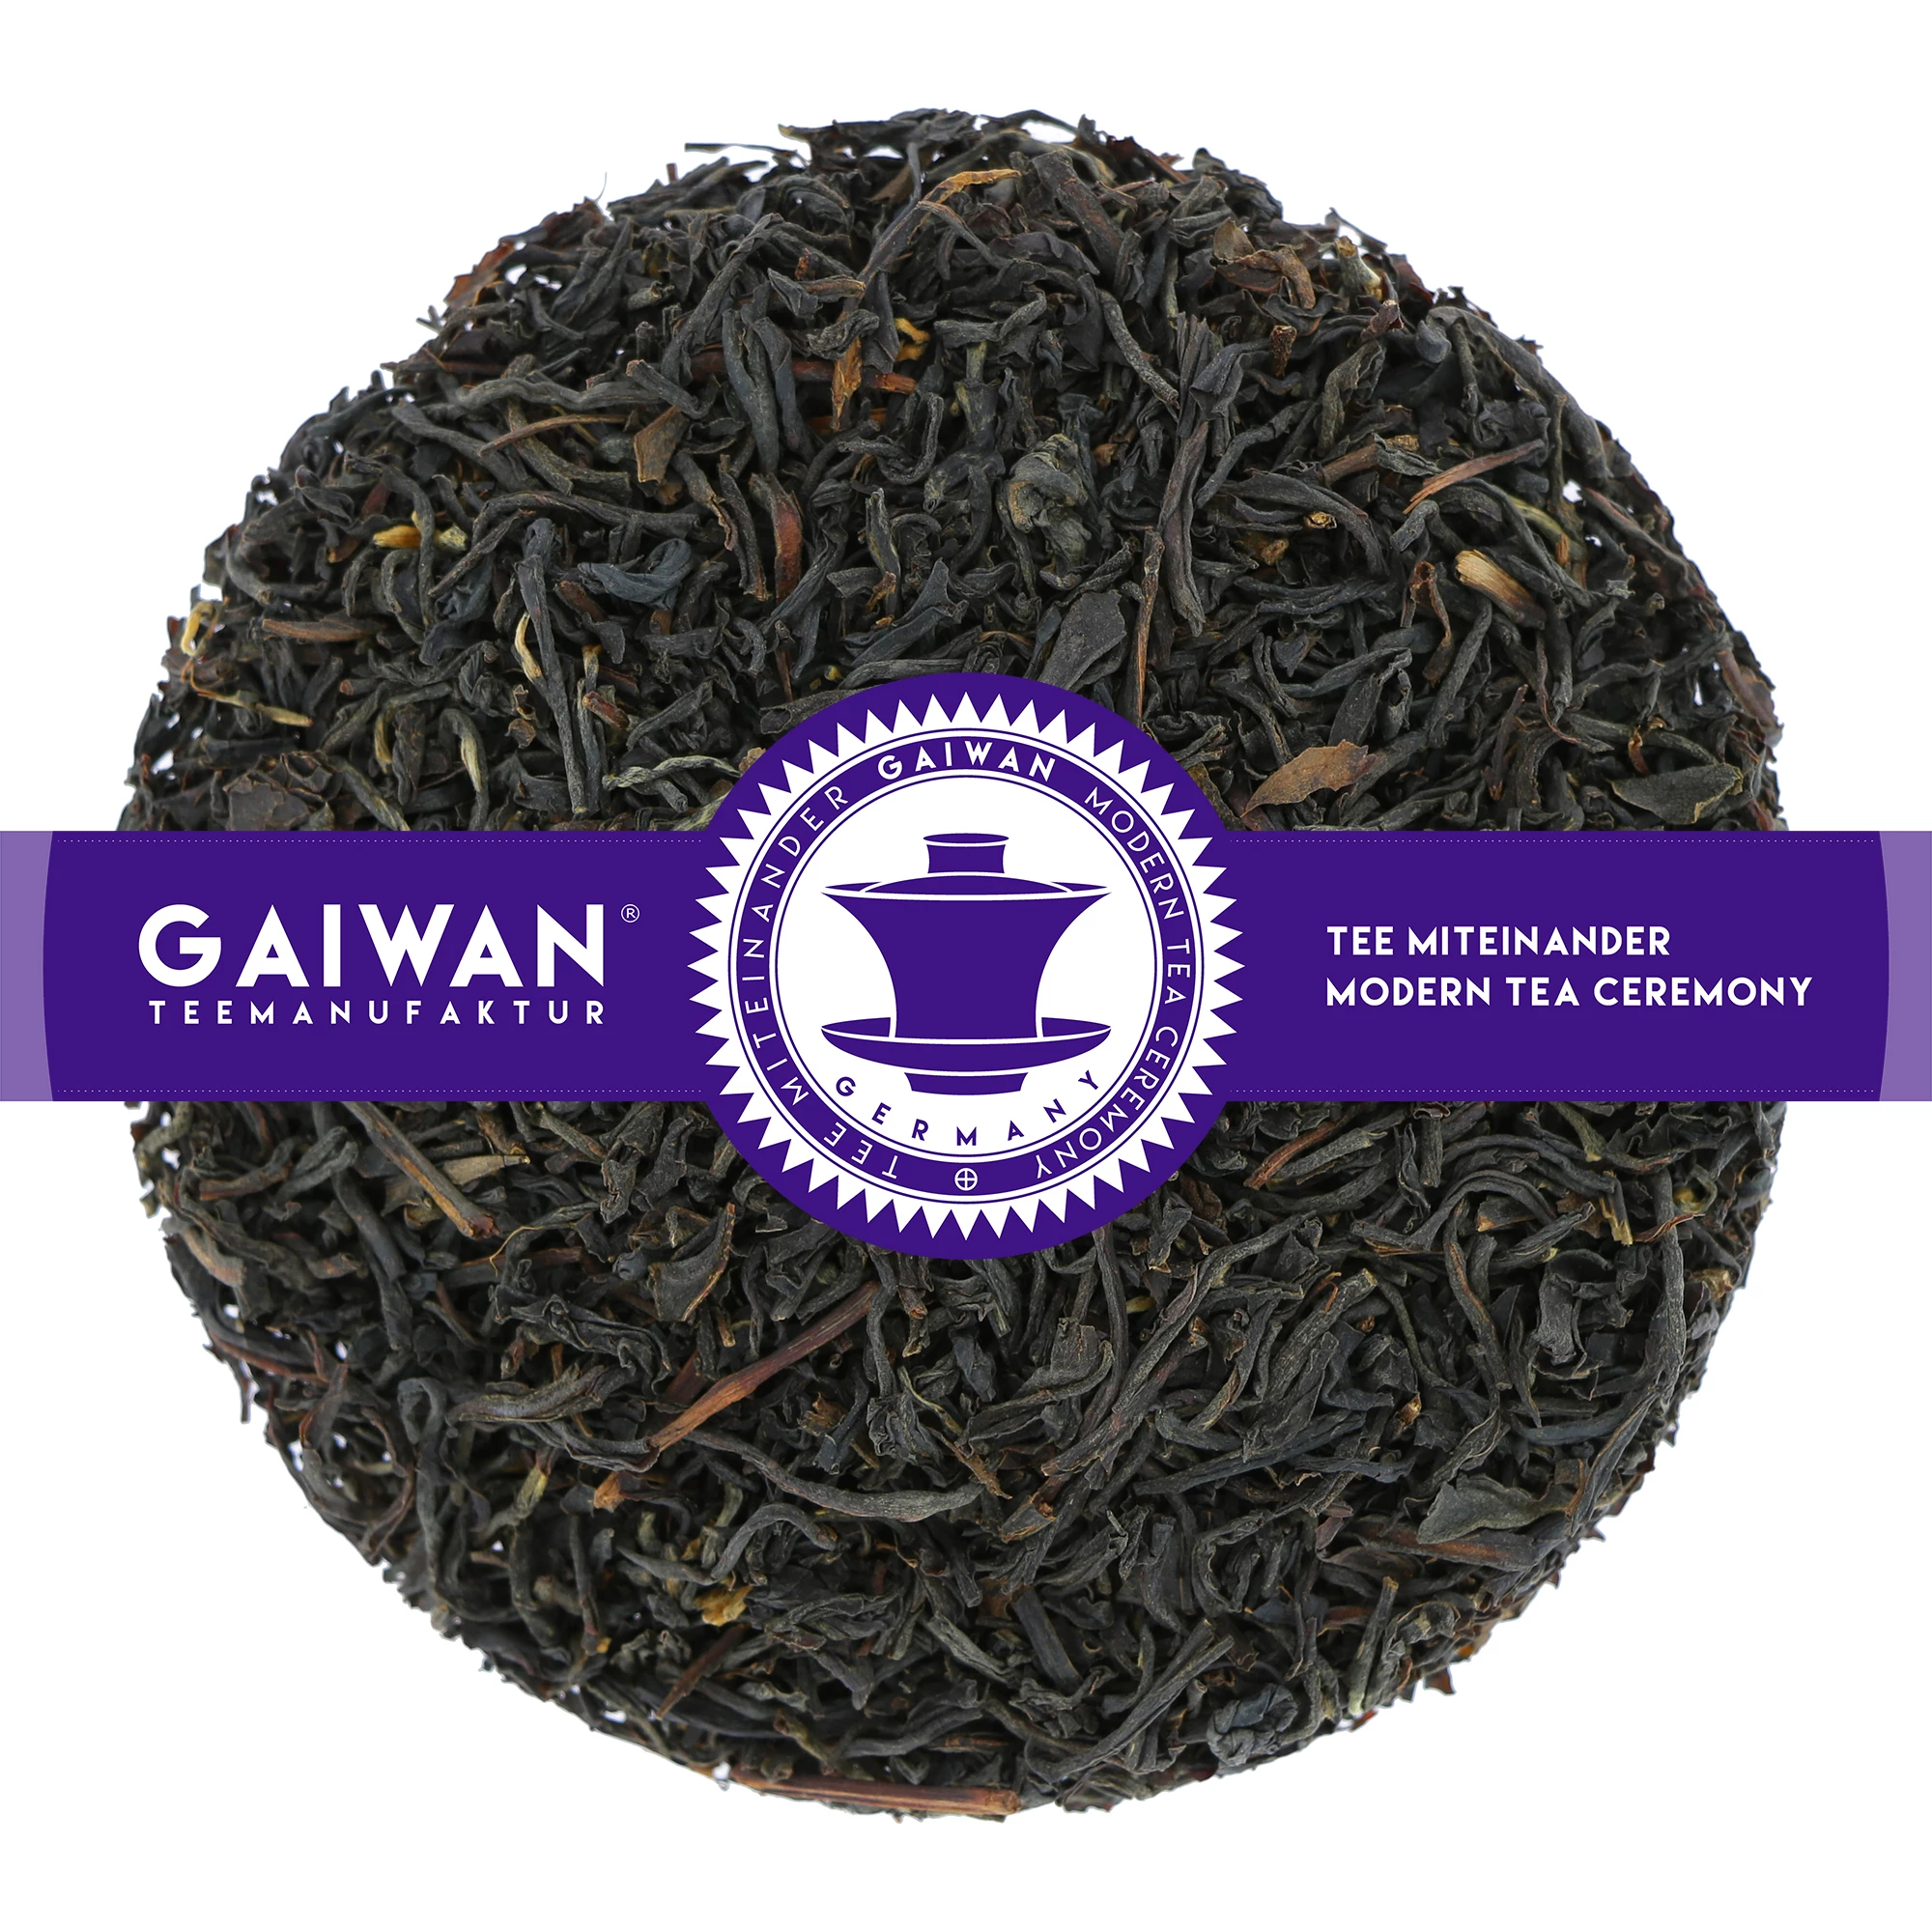 Loose leaf black tea "Golden Nepal FTGFOP"  - GAIWAN® Tea No. 1395